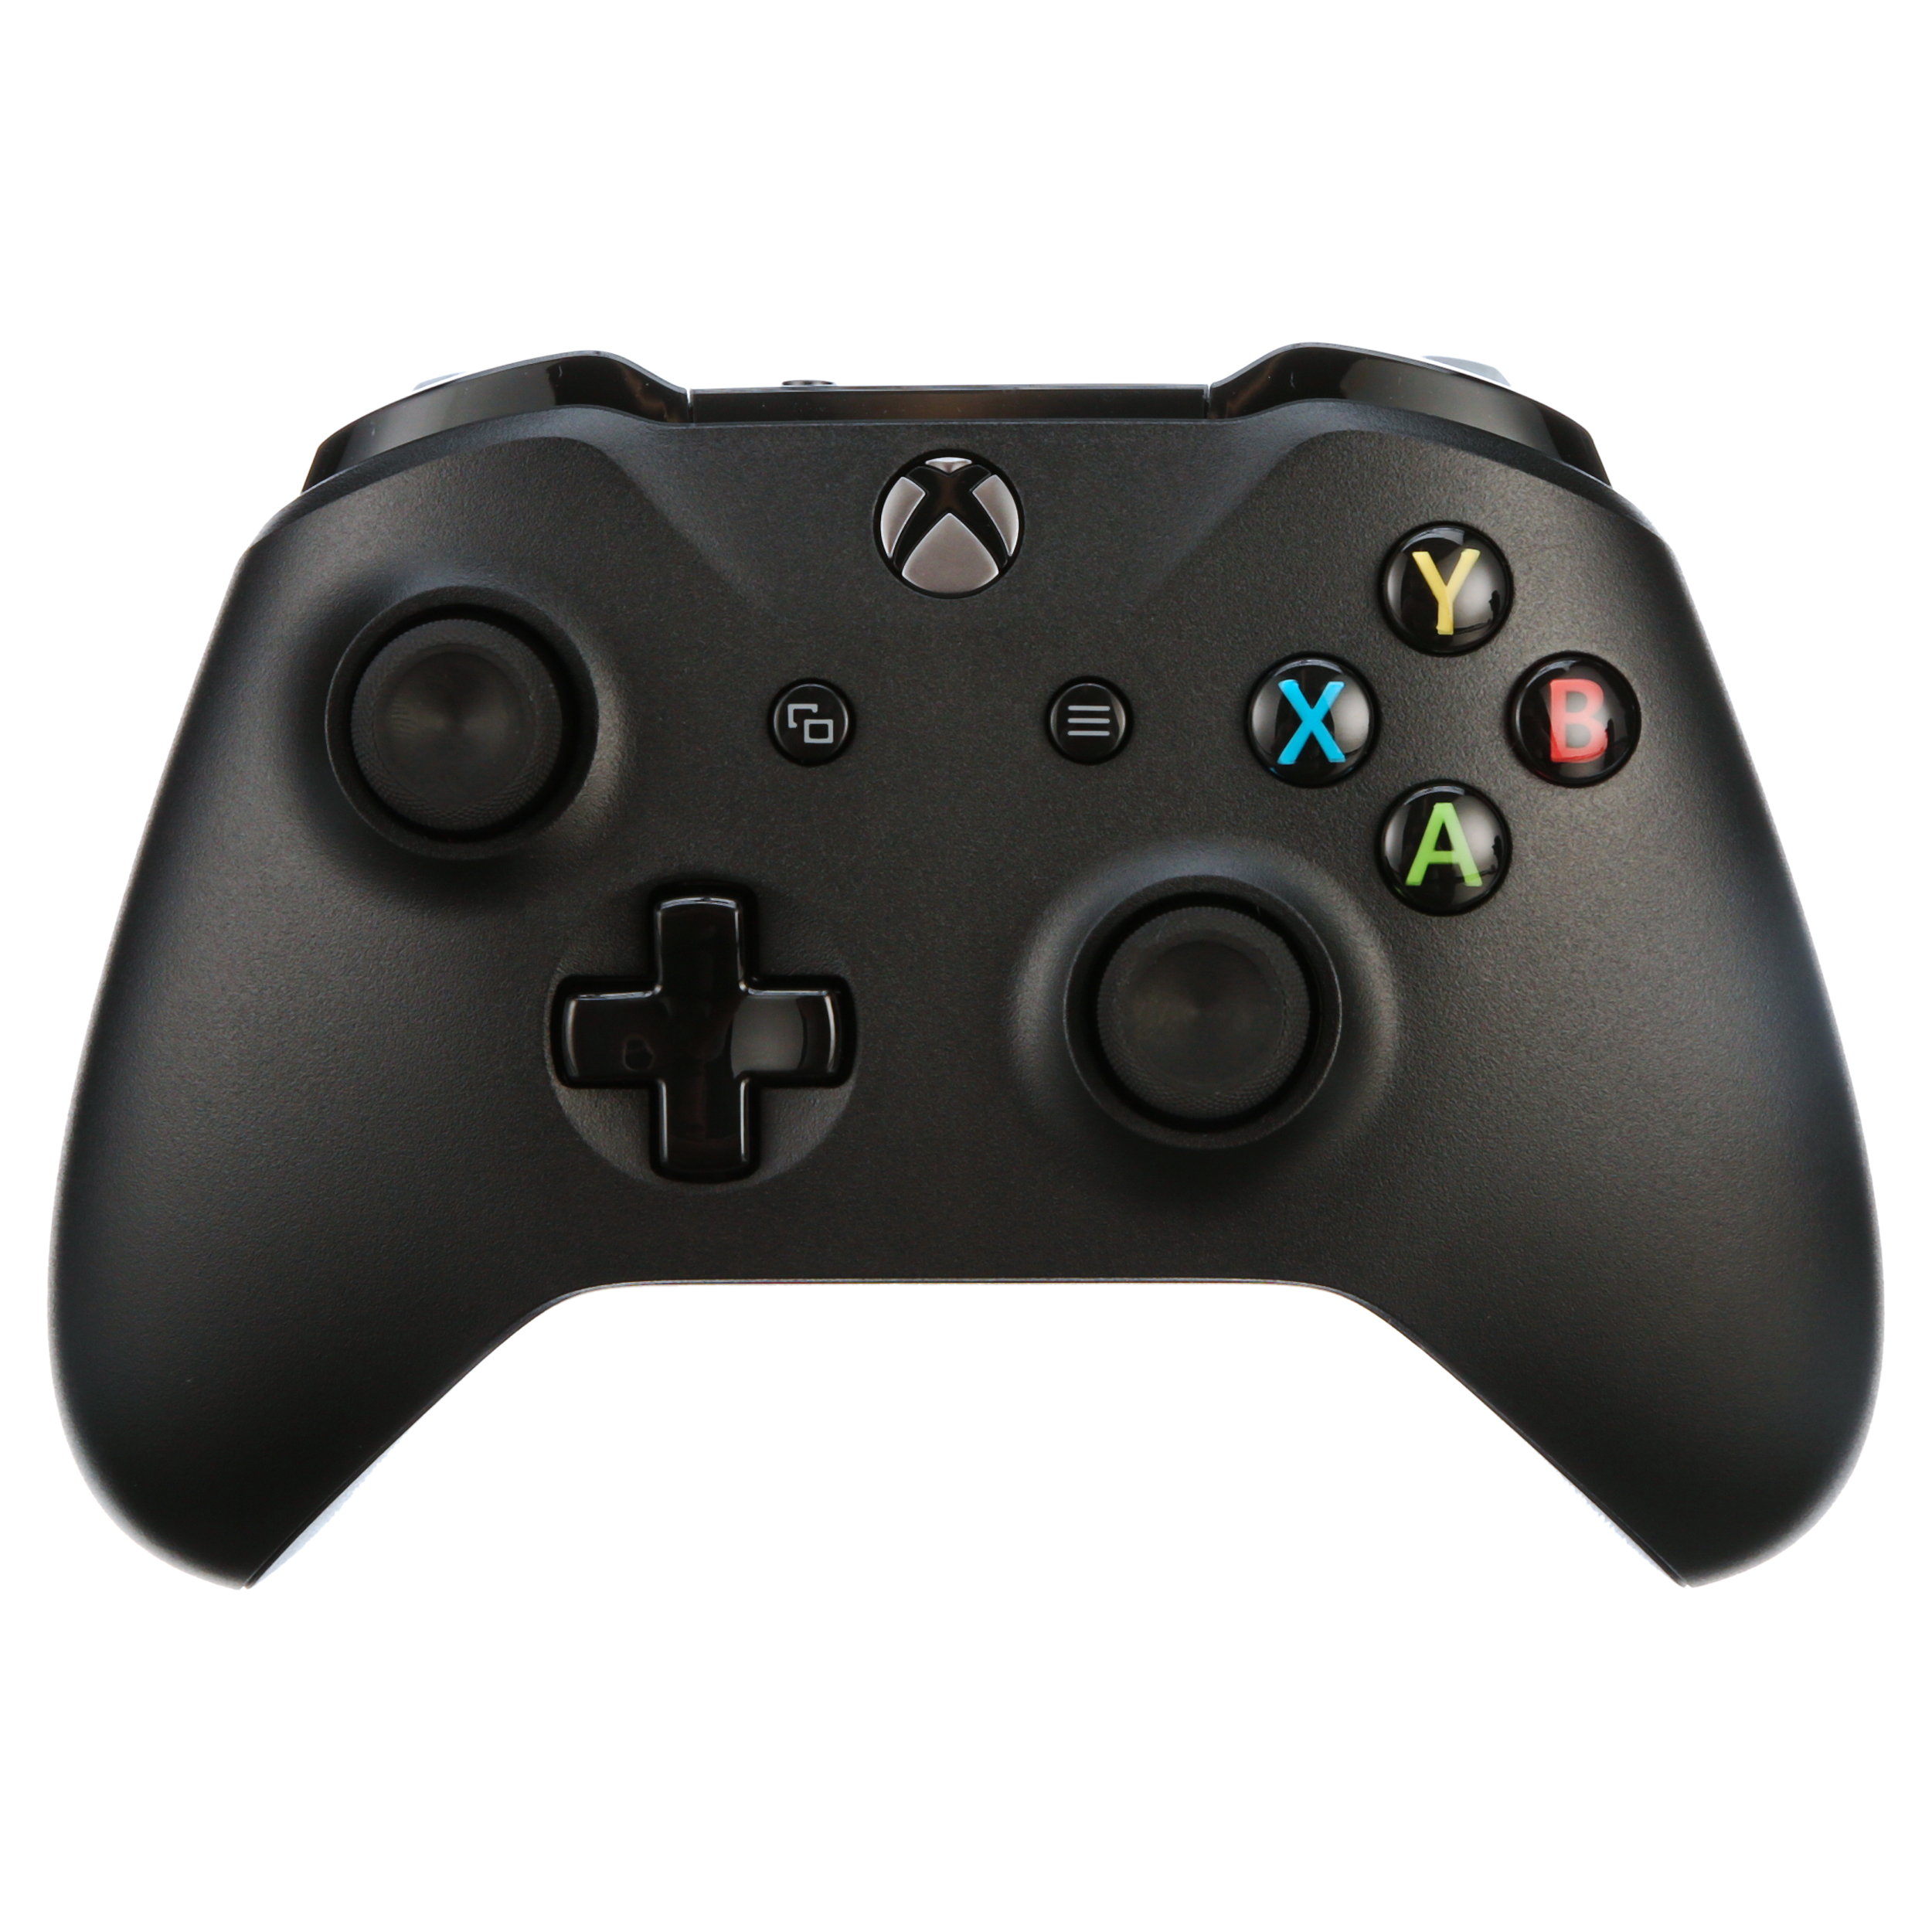 Restored Microsoft Xbox One X 1TB, 4K Ultra HD Gaming Console in Black, FMQ-00042, 889842246971 (Refurbished) - image 4 of 9